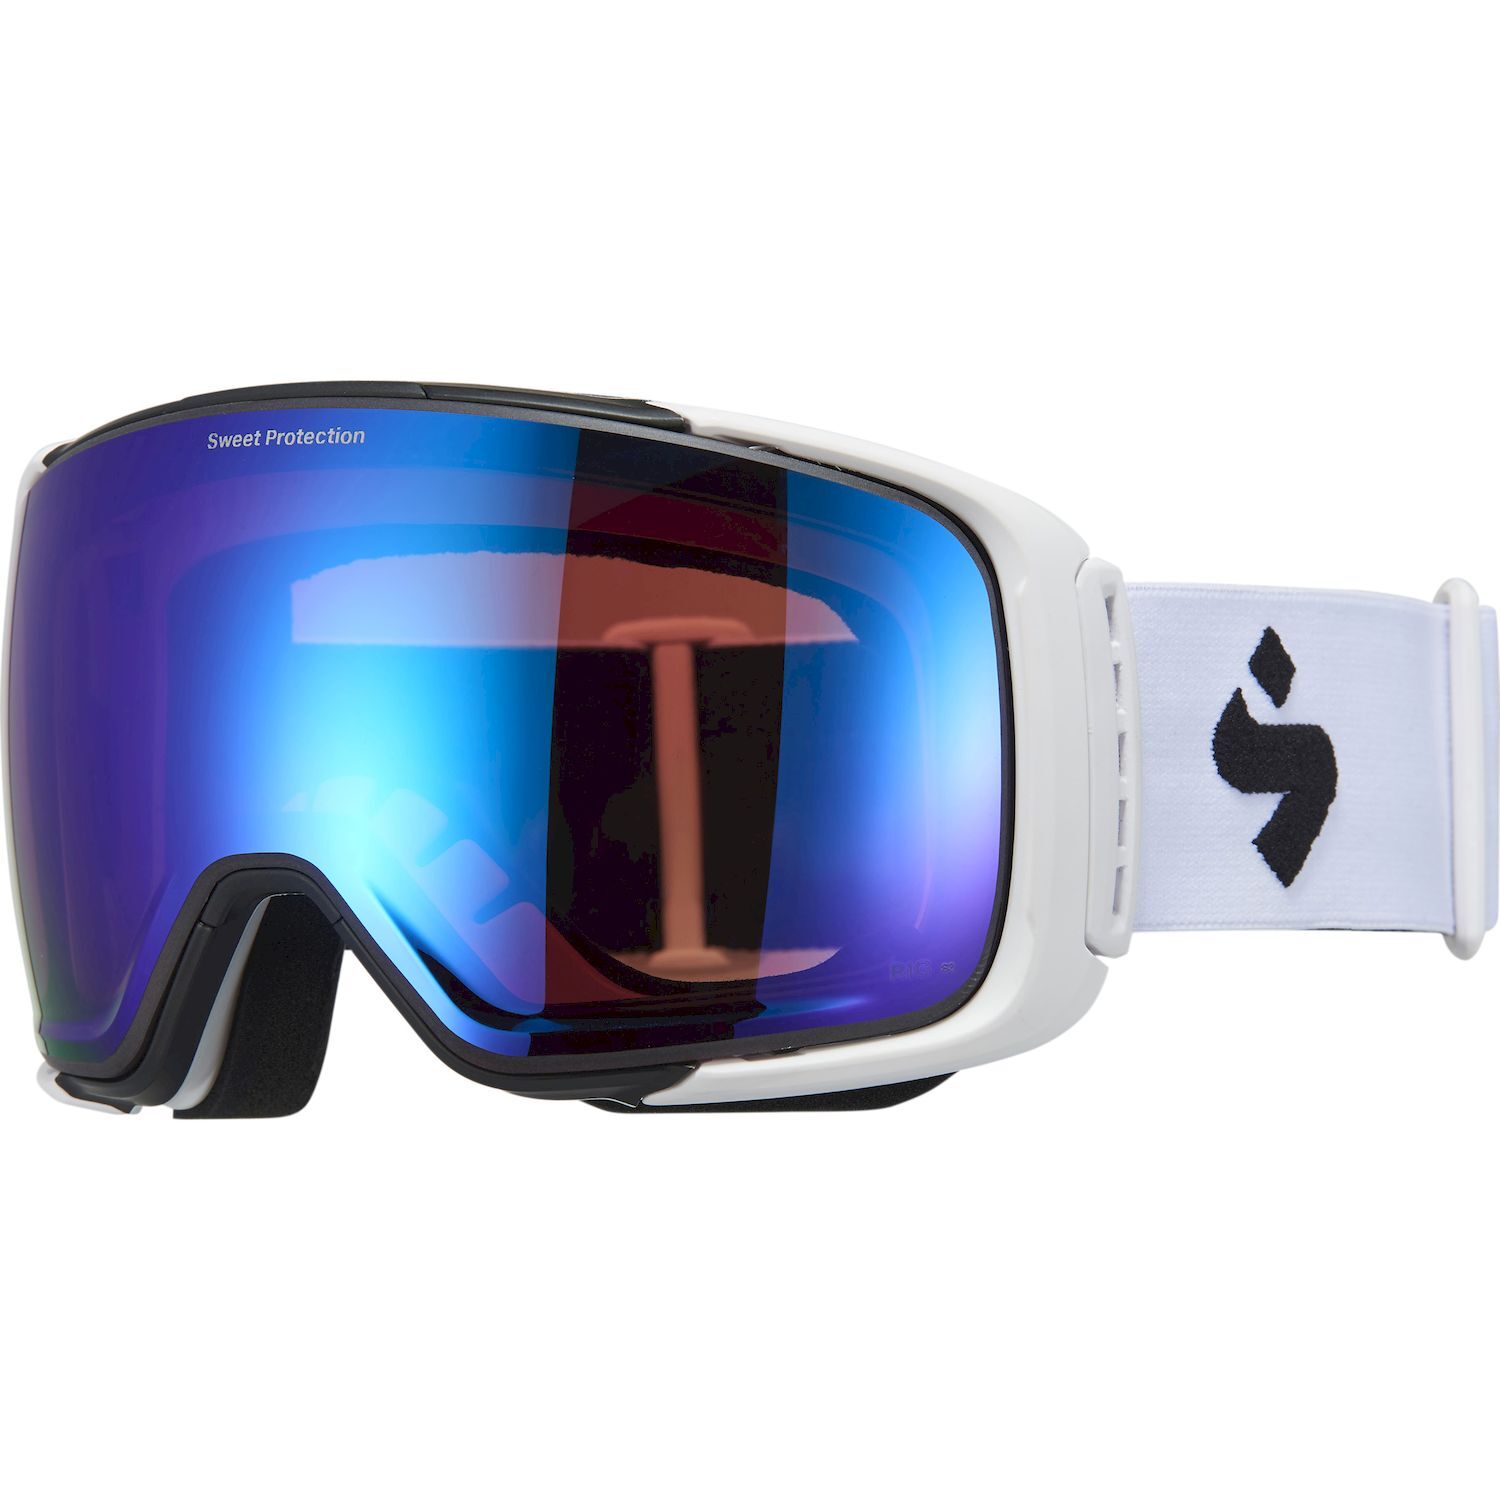 Sweet Protection Interstellar RIG Reflect BLI - Ski goggles - Men's